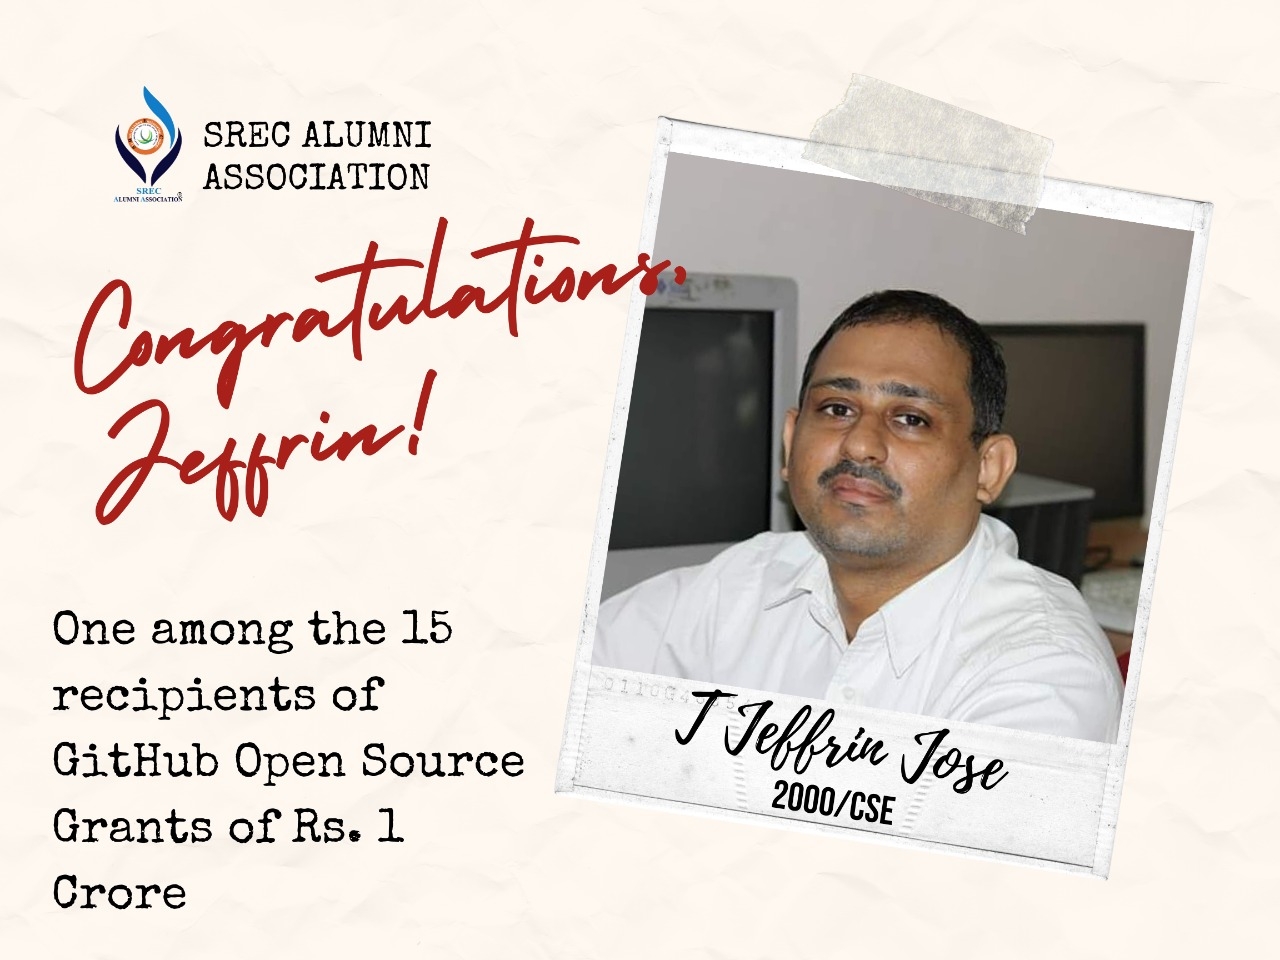 Congratulations!!!!!!!Mr.T.Jeffrin Jose (2000/CSE) - GitHub Open Source Grant of Rs 10 million